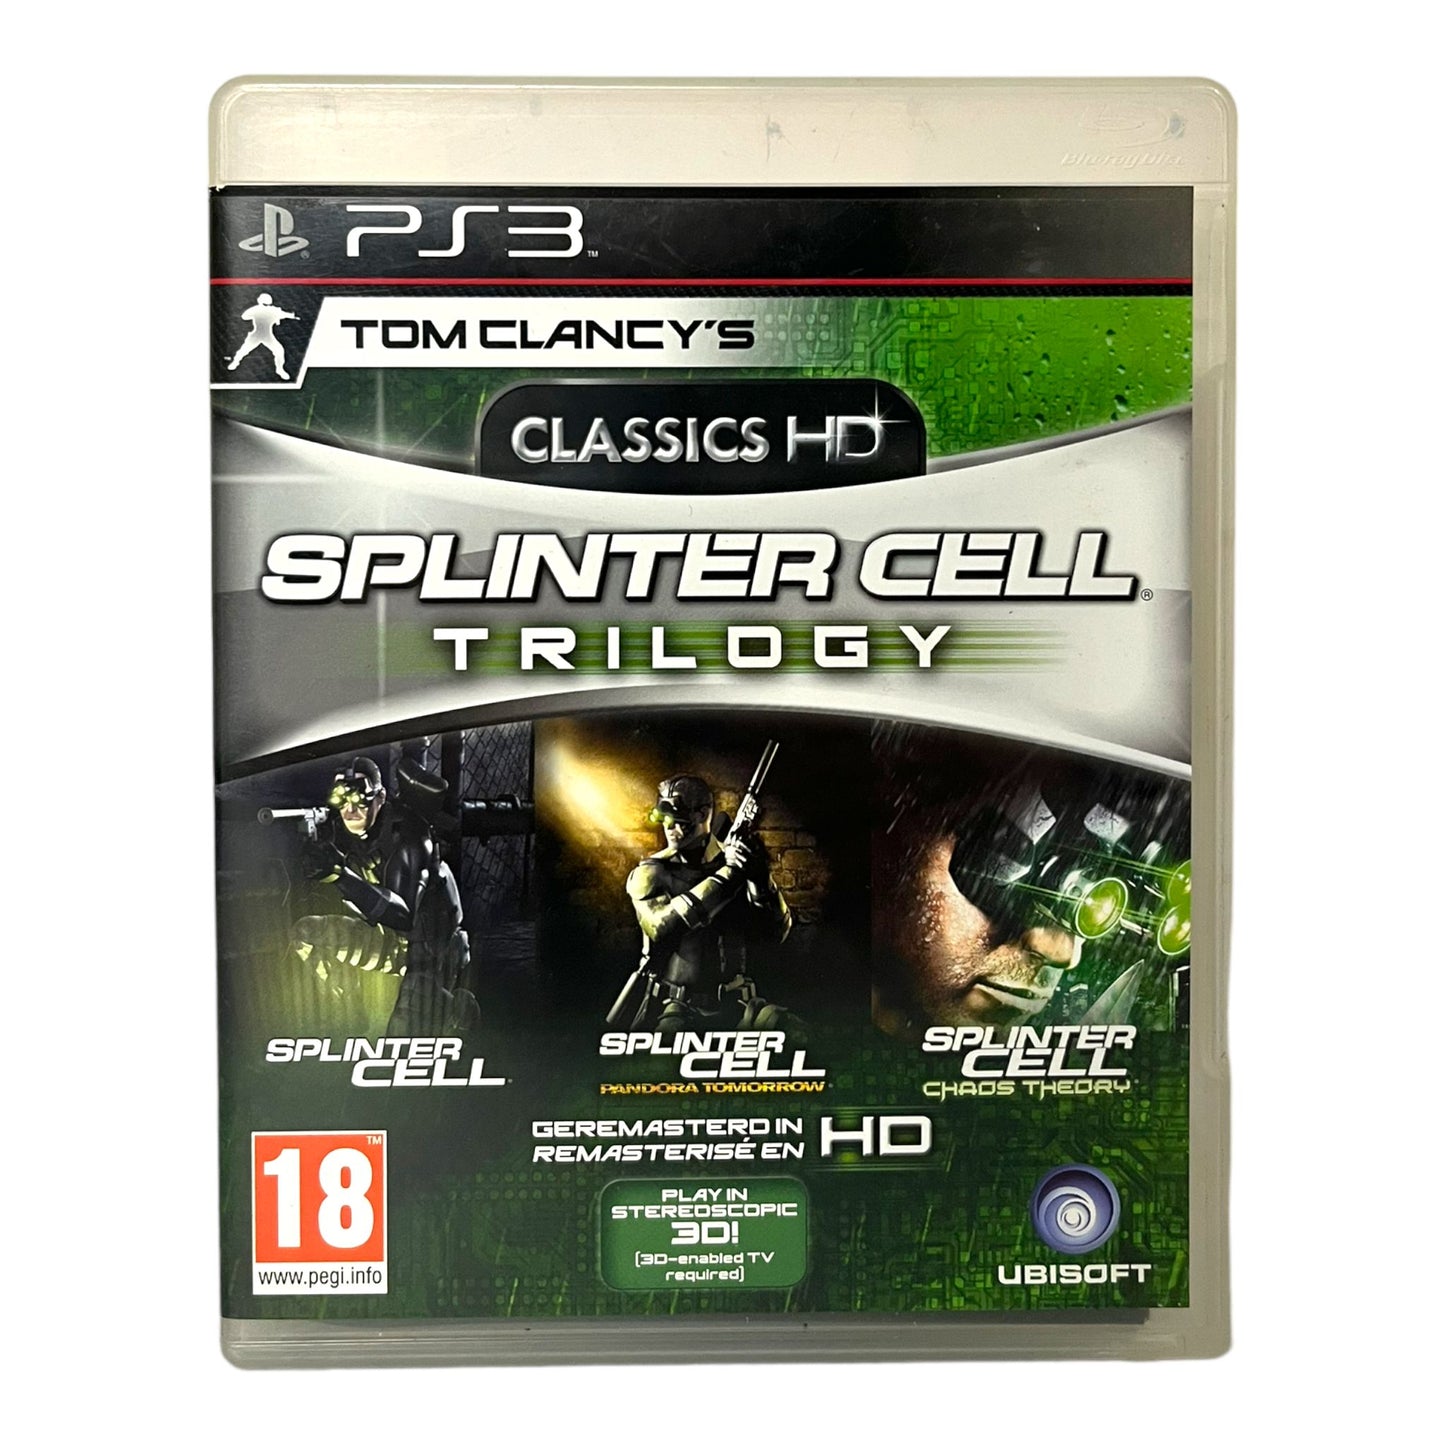 Splinter Cell: Trilogy